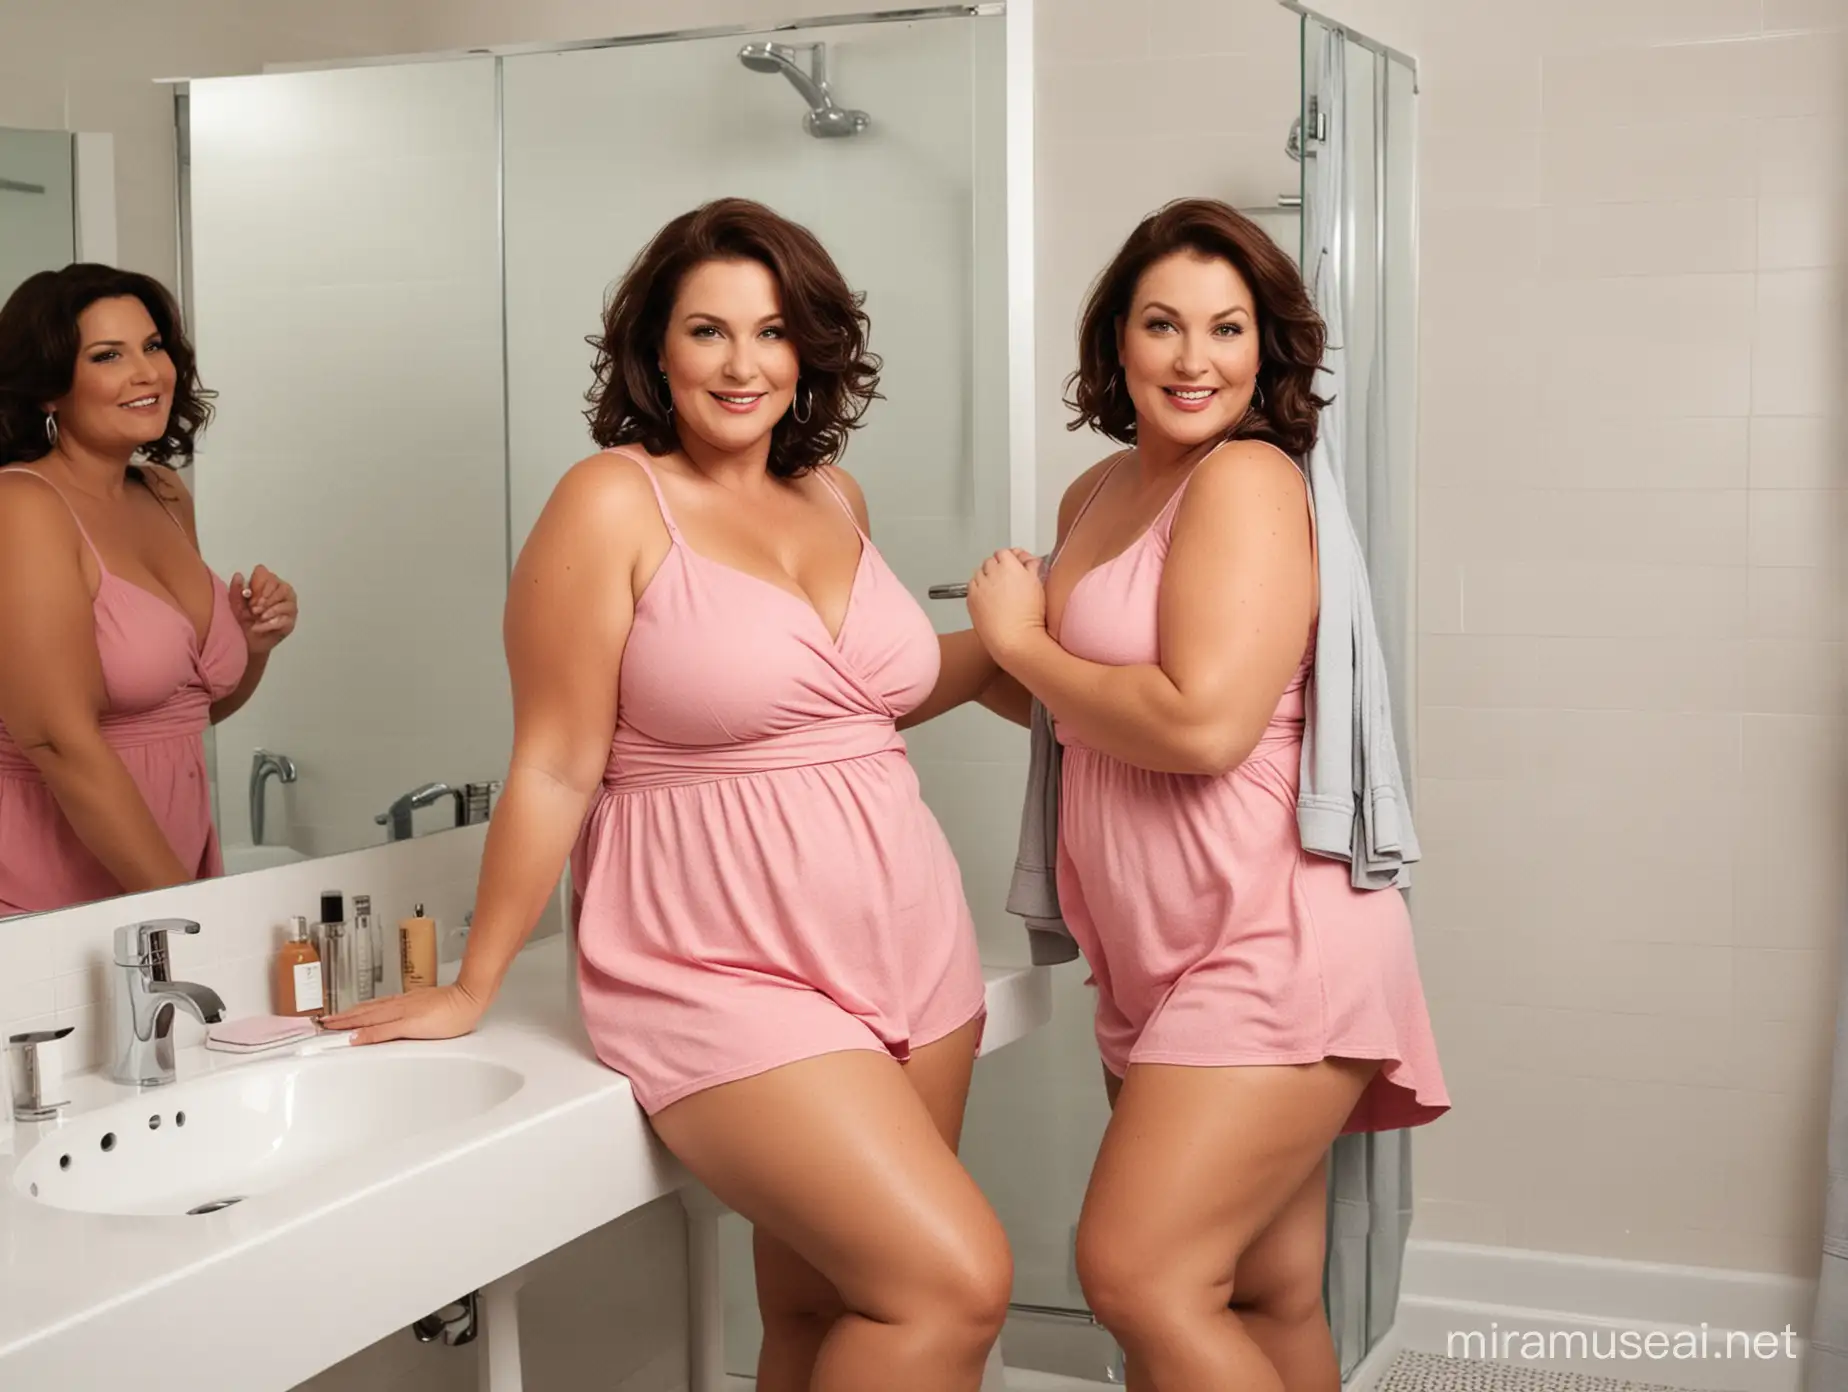 Elegant Plus Size Women in Their 50s Enjoying a Spa Day in a Luxurious Bathroom